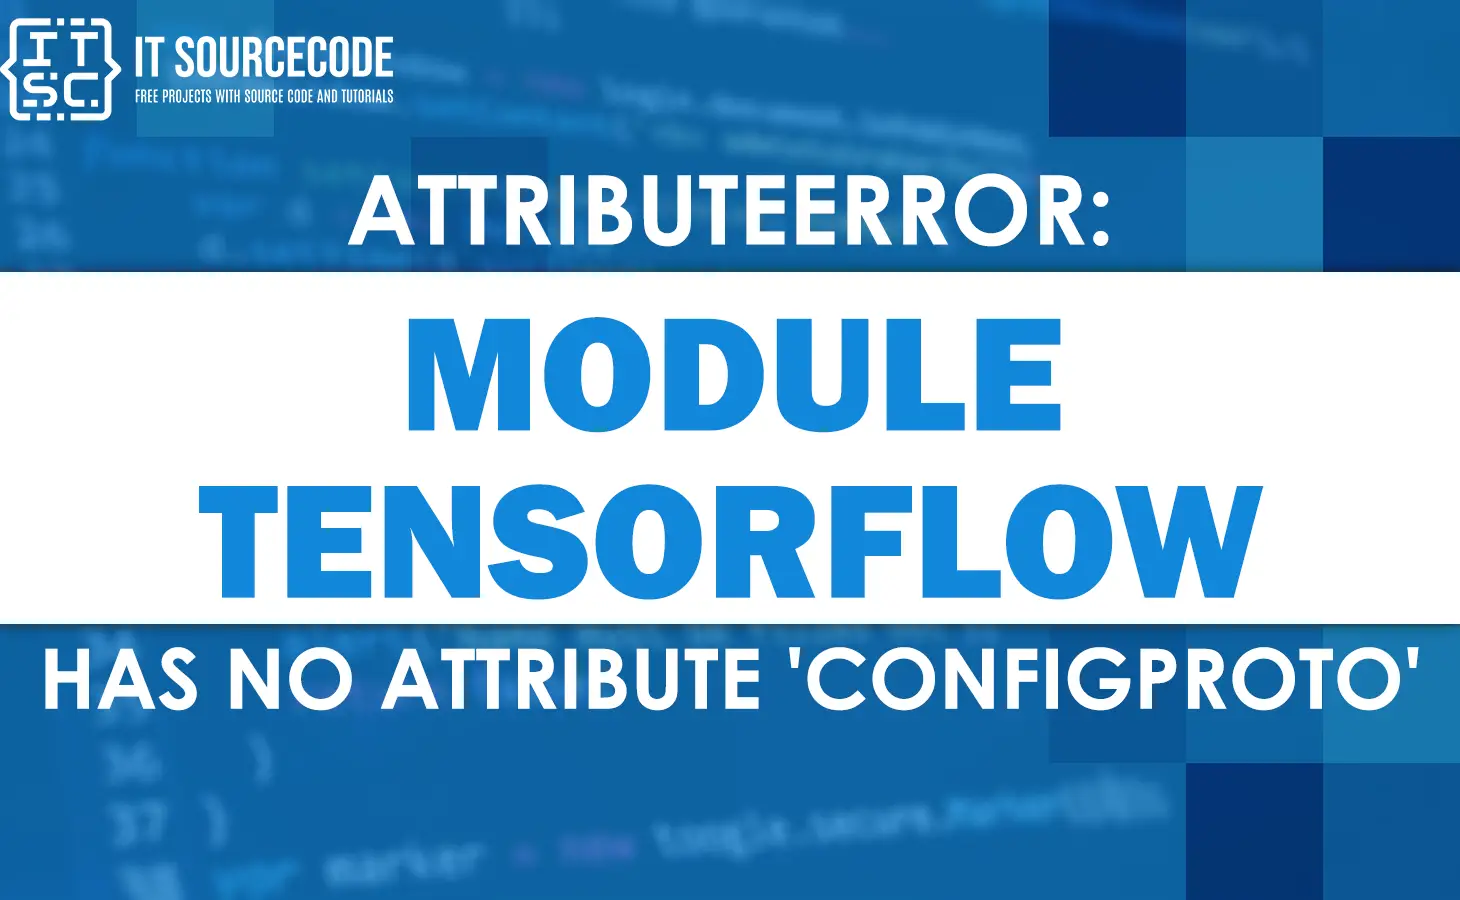 Attributeerror: module 'tensorflow' has no attribute 'configproto'